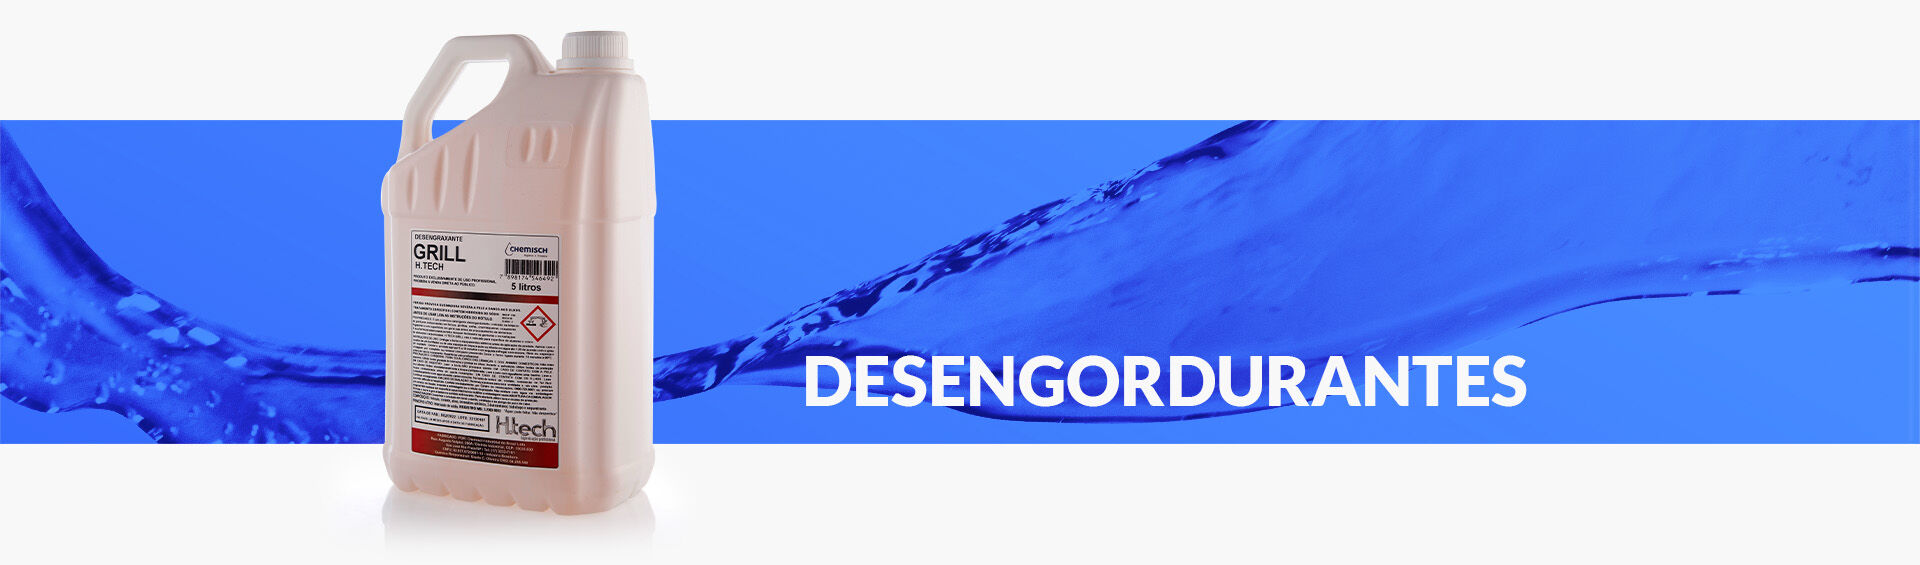 Banner de Desengordurantes